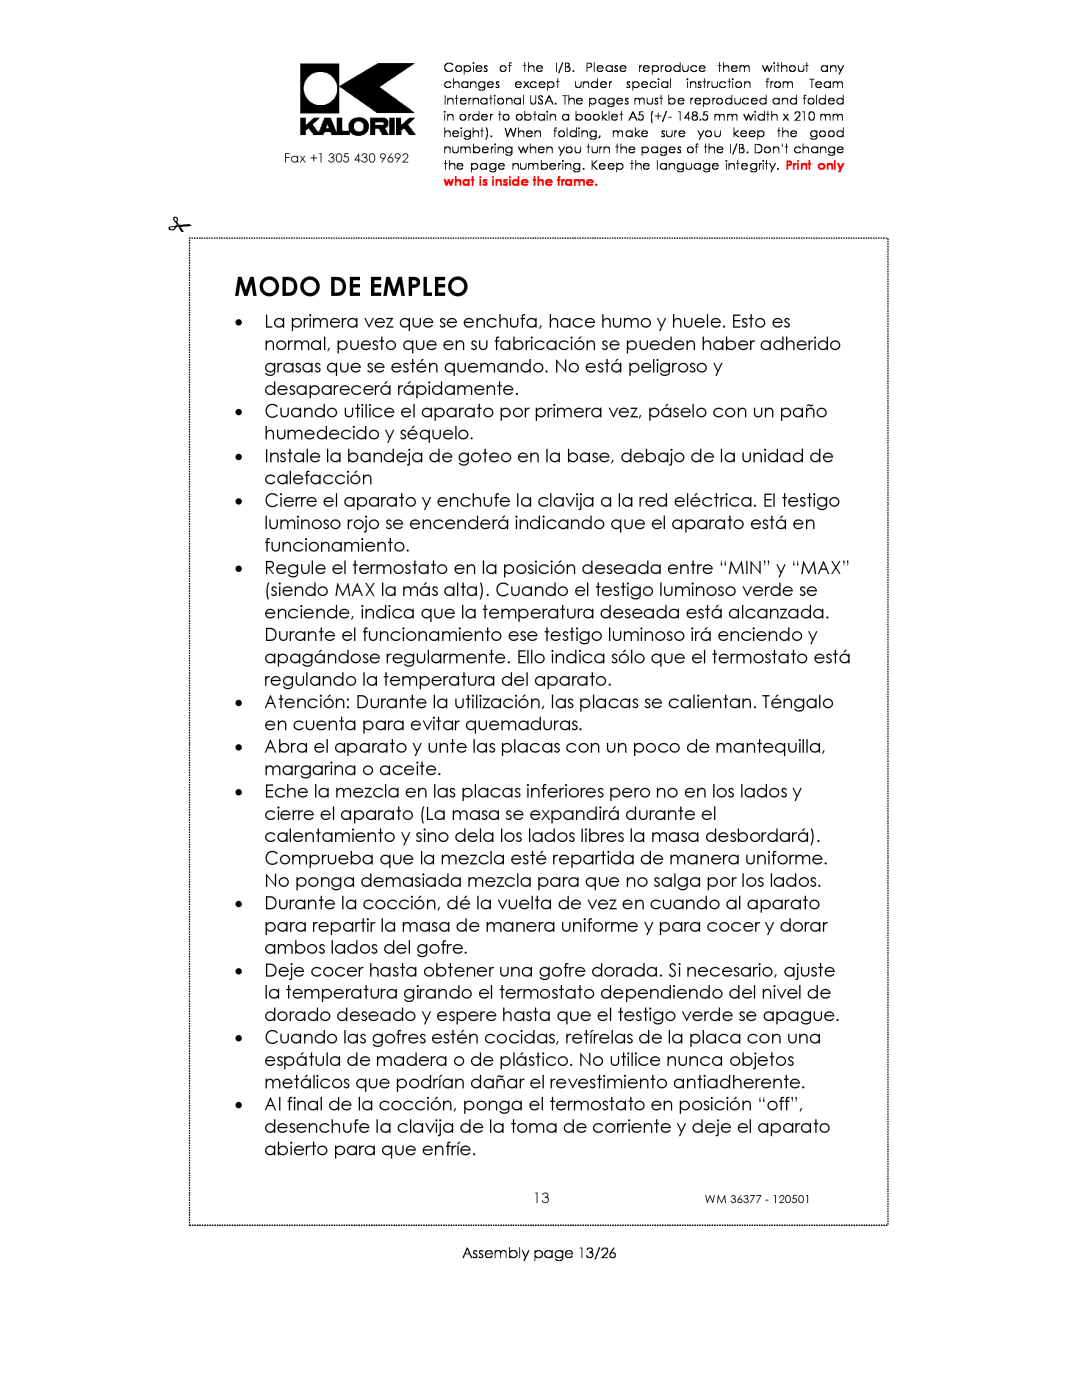 Kalorik WM 36377 manual Modo De Empleo, Assembly page 13/26 